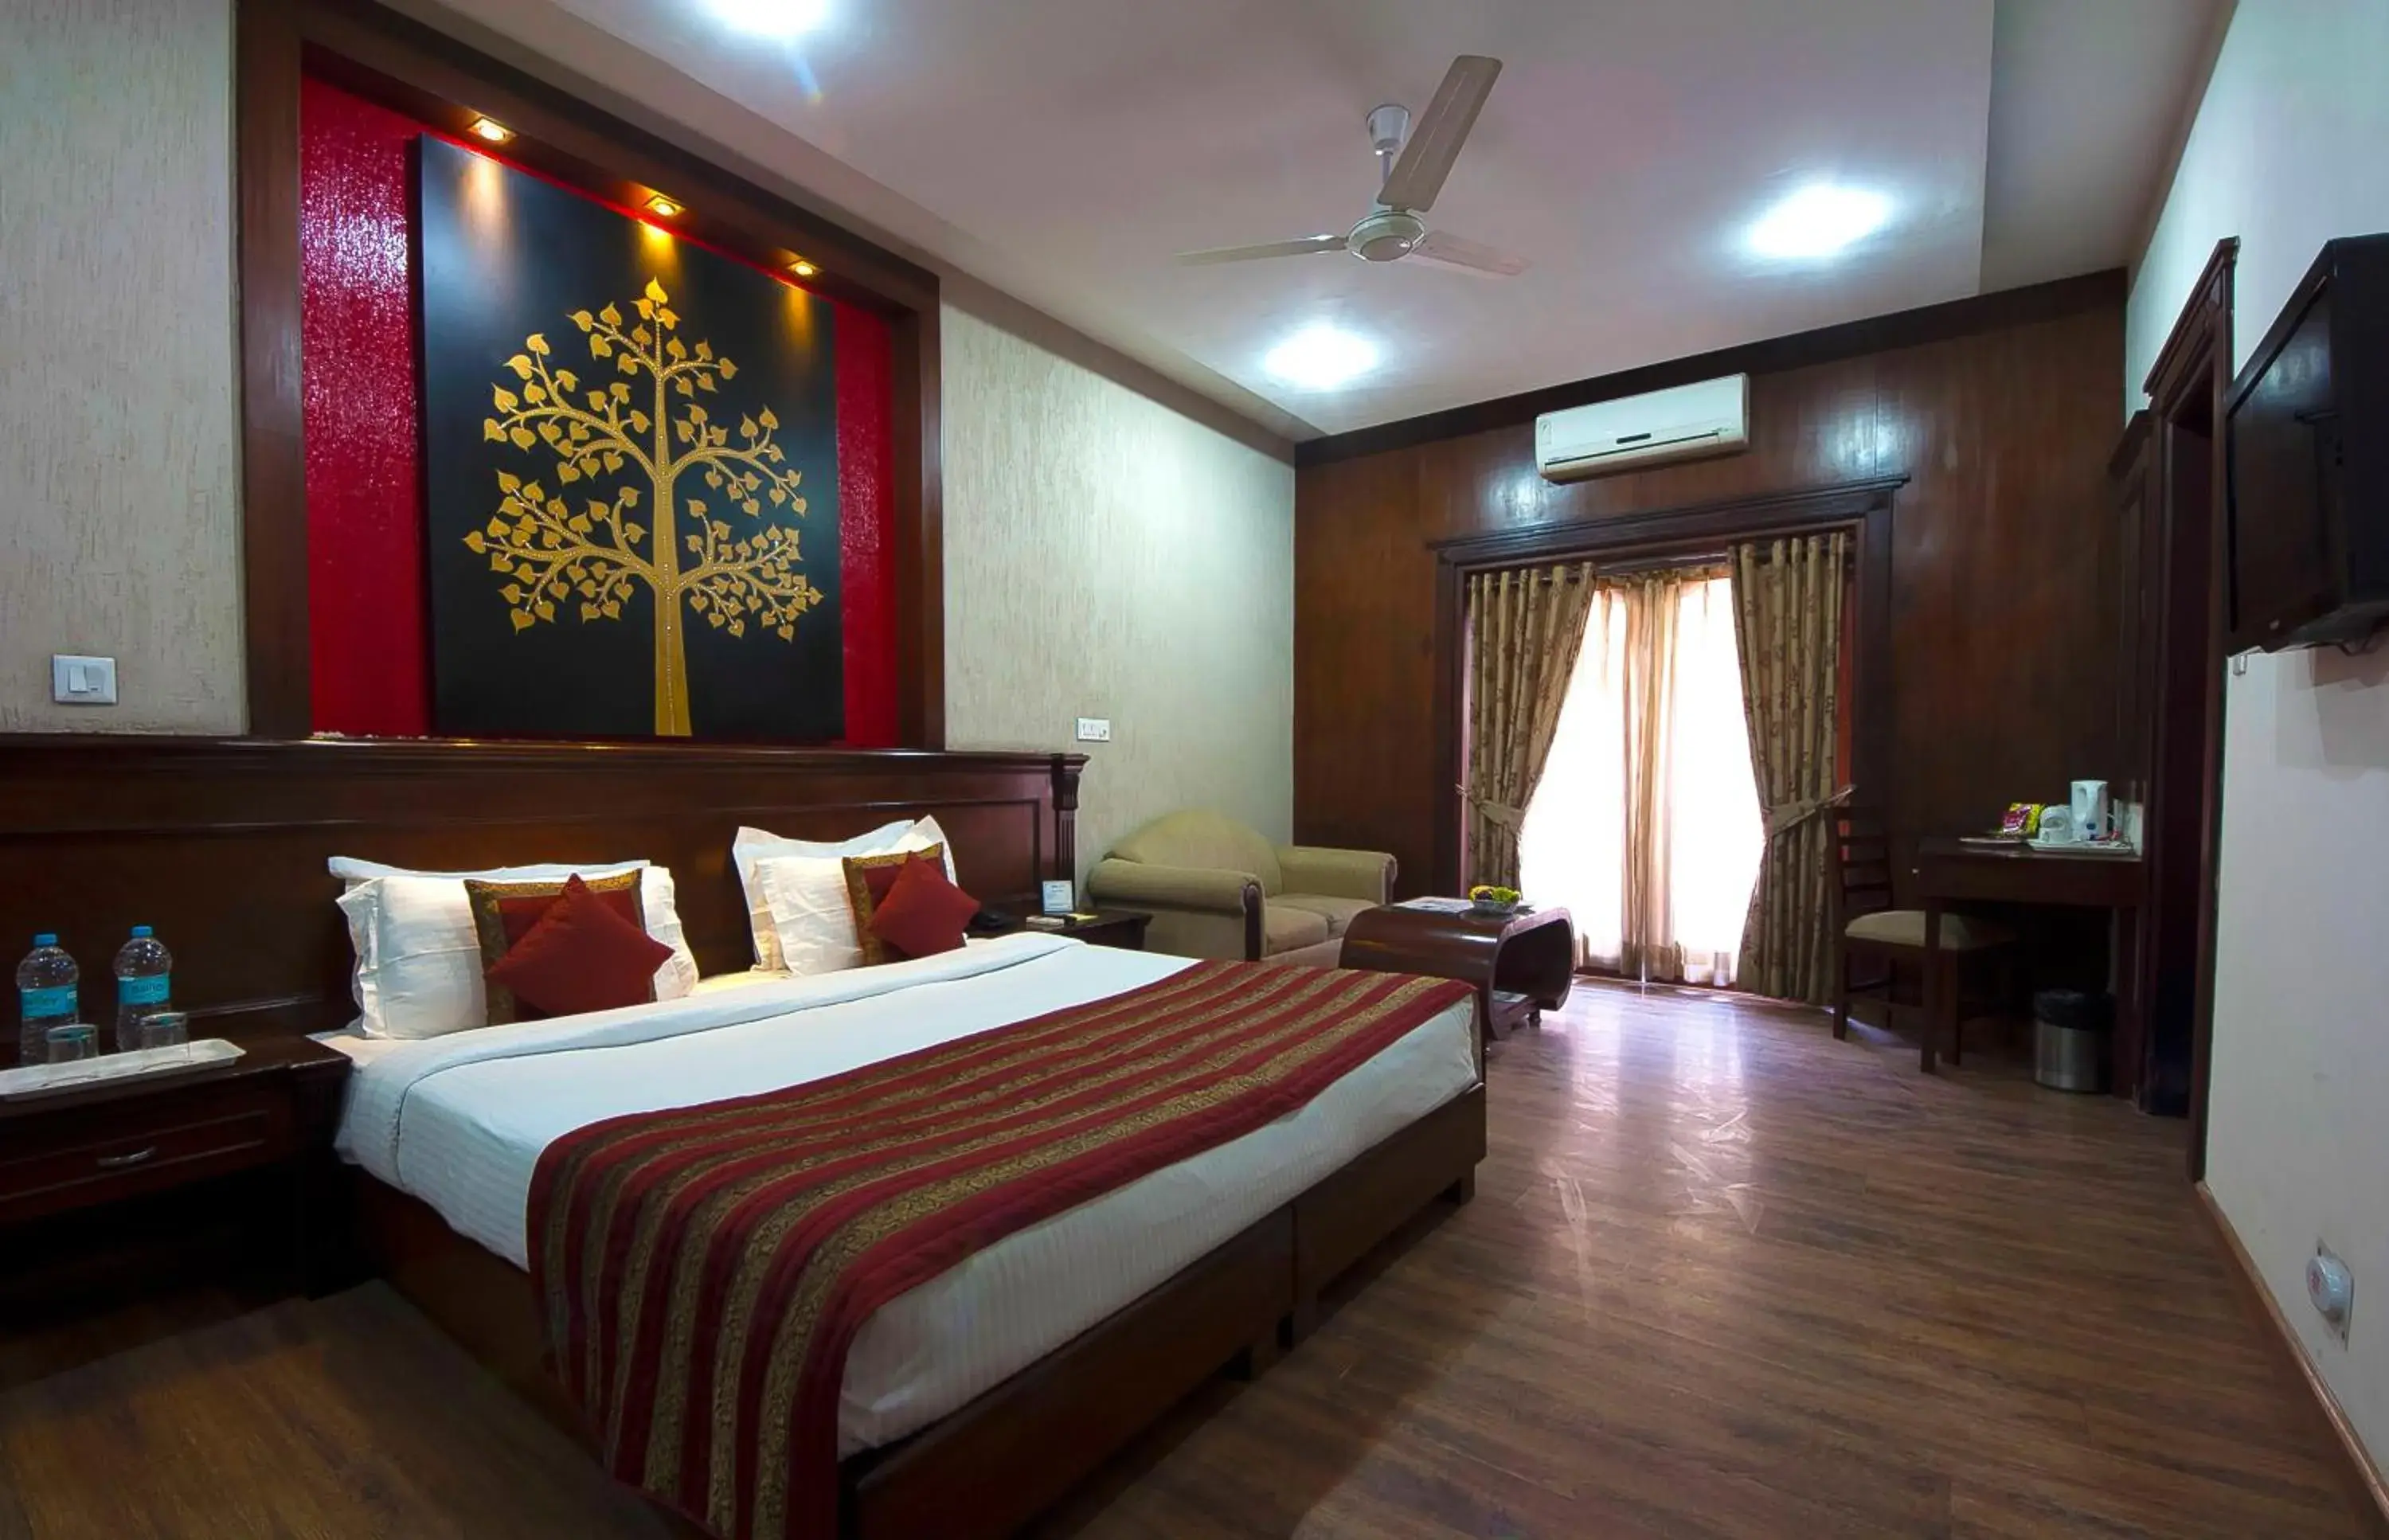 Bed in Siris 18 Hotel Gurgaon